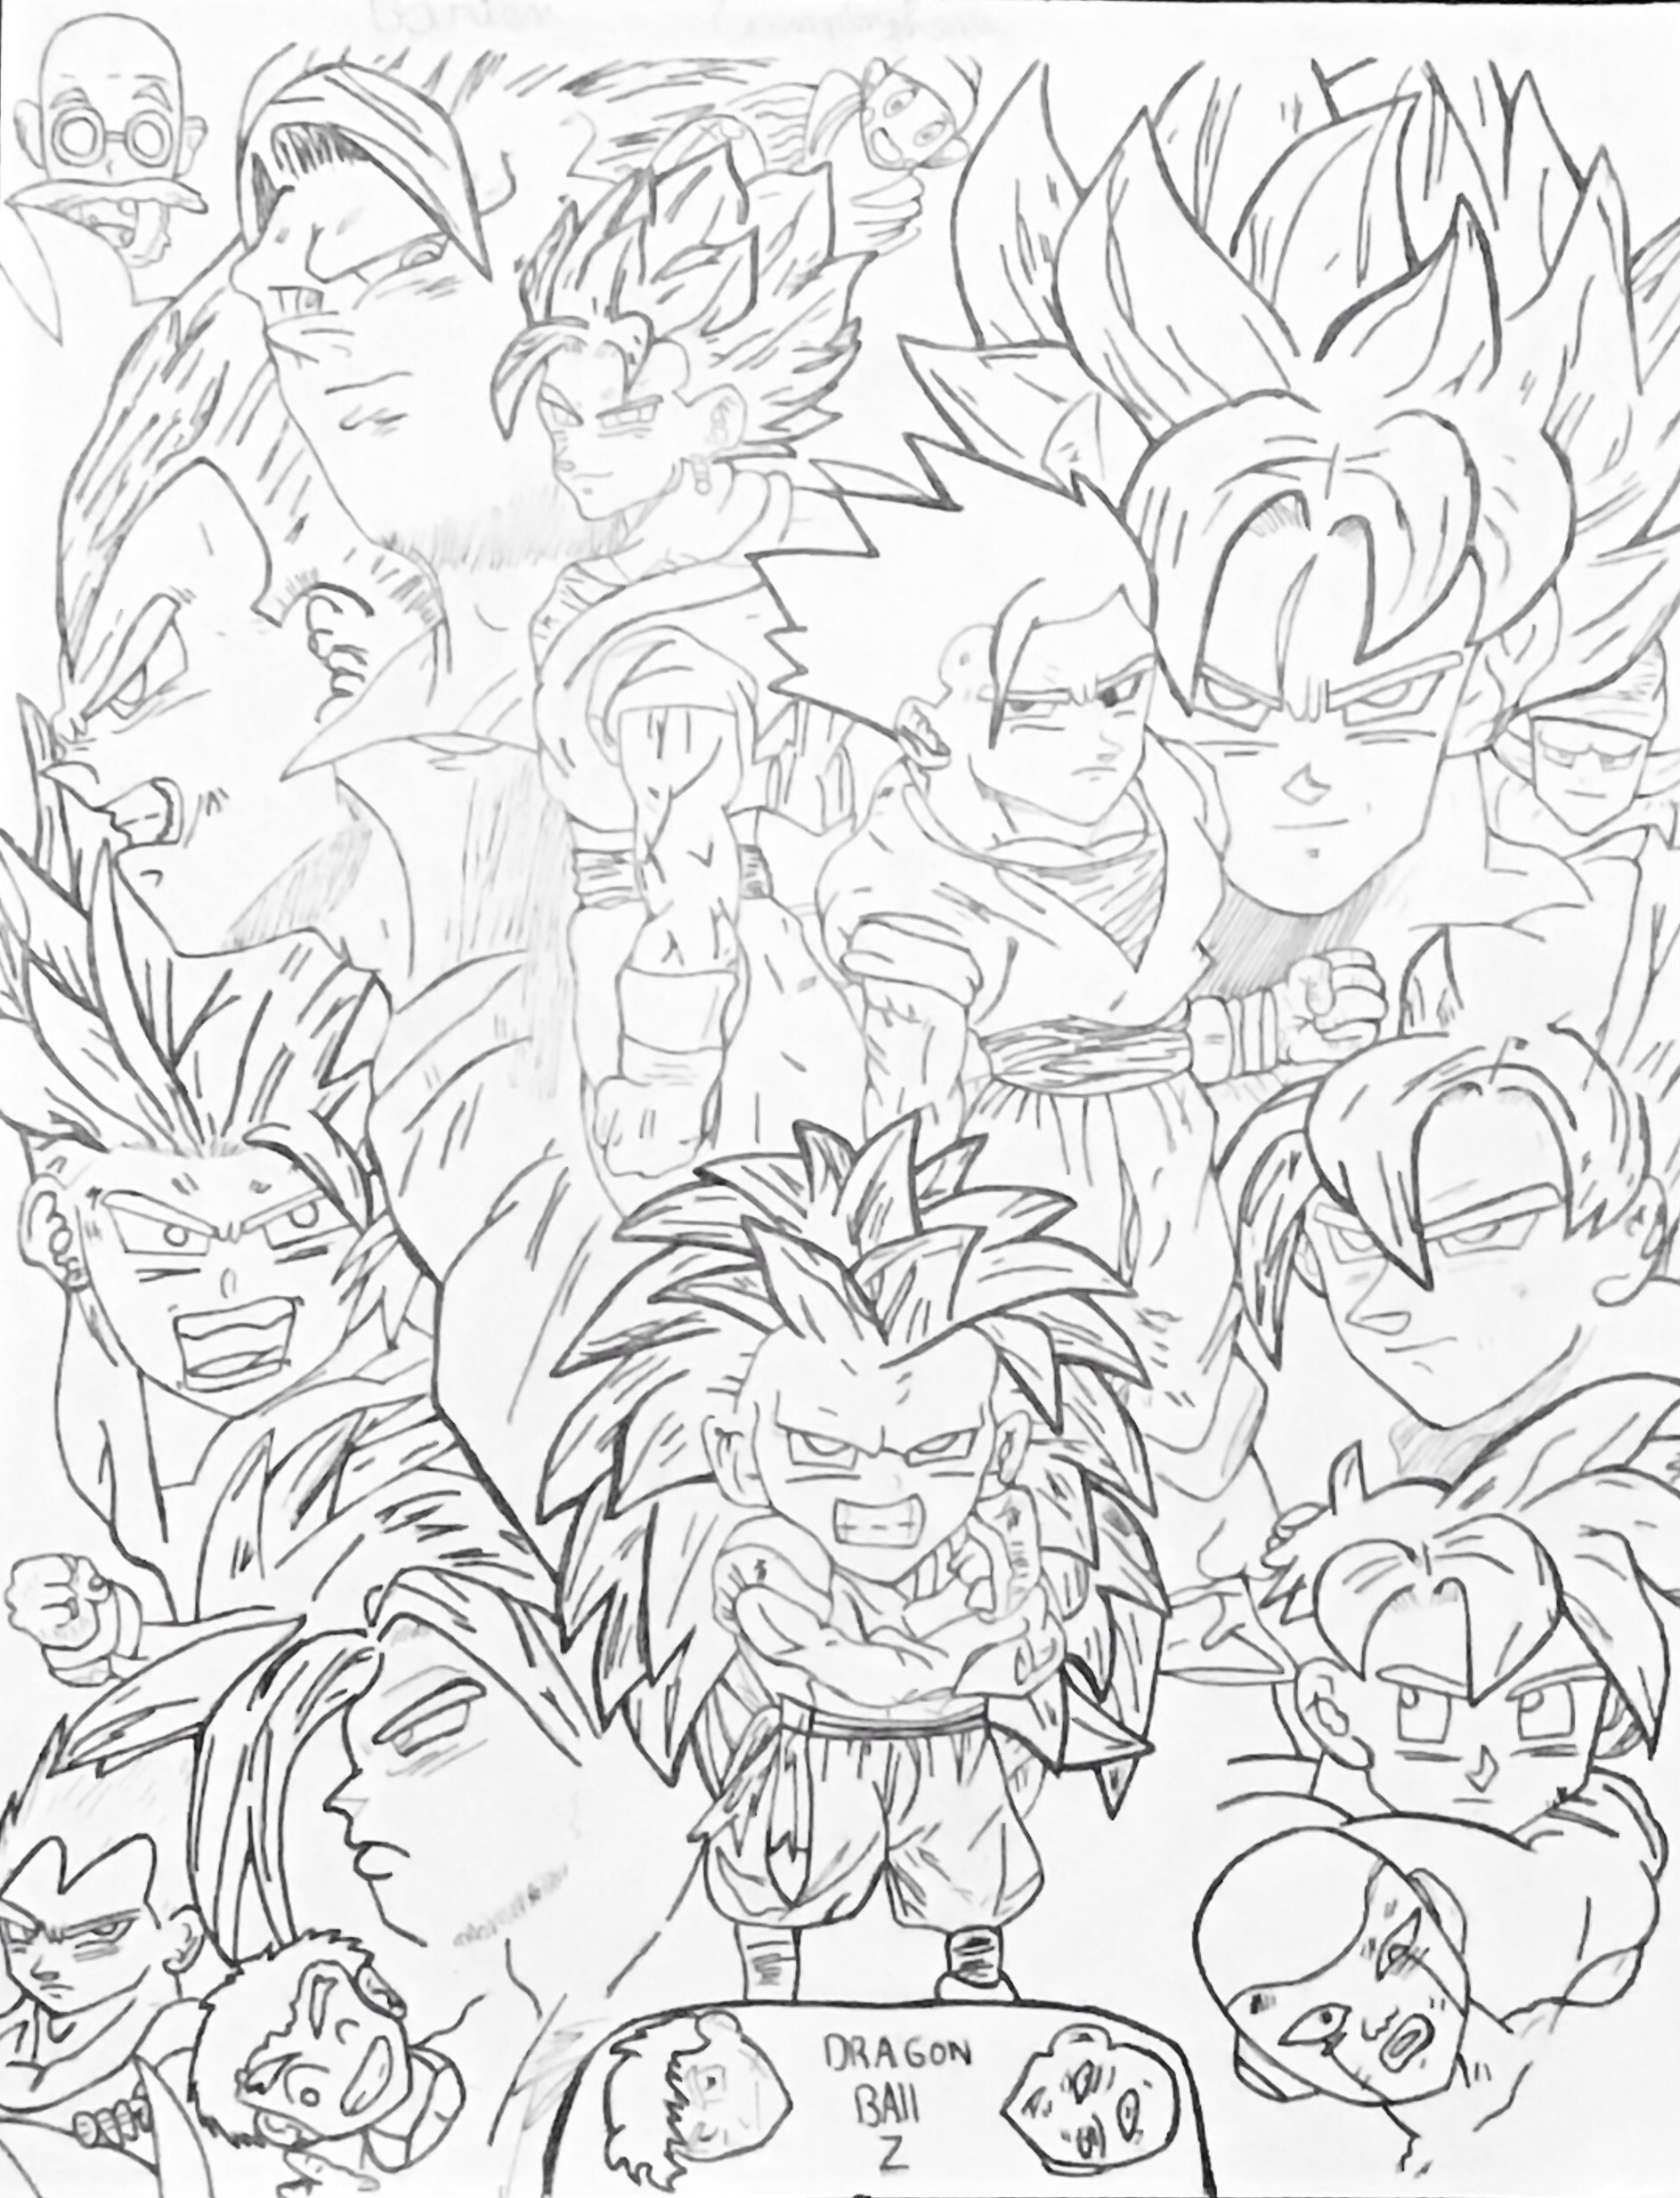 ArtStation - Old Dragon Ball Z drawing